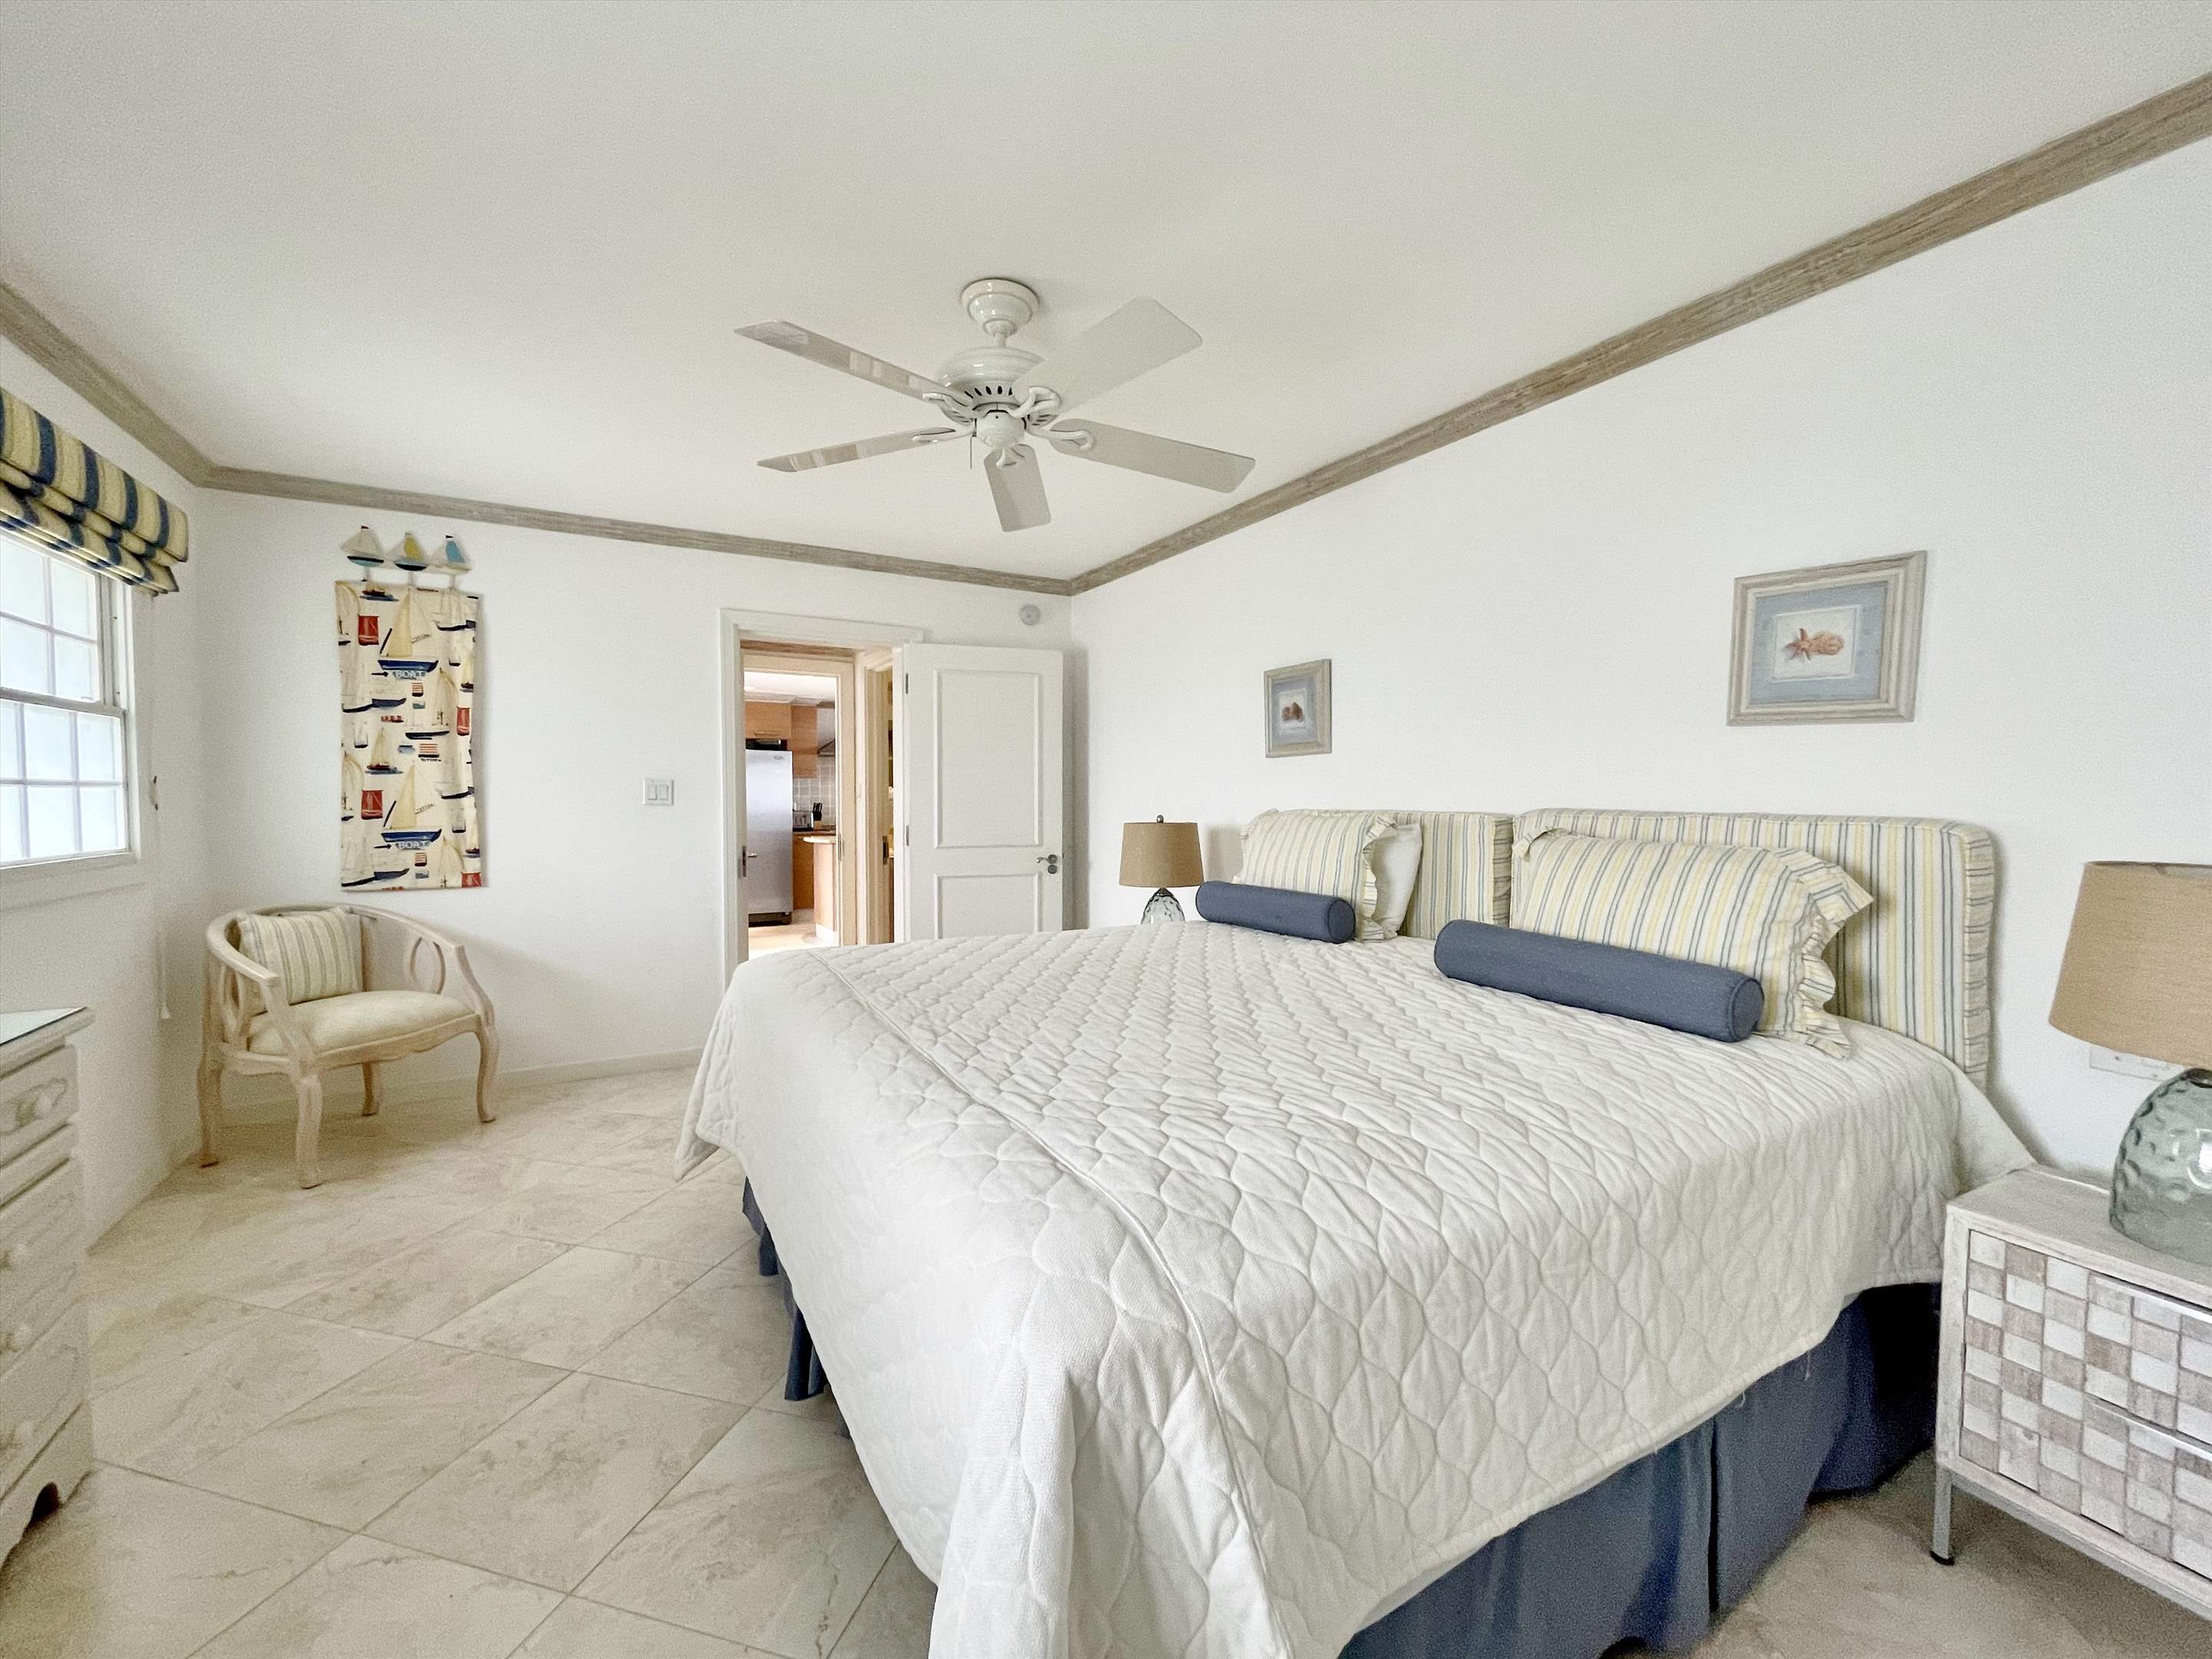 Villas on the Beach 403, 2 bedroom, 2 bedroom apartment in St. James & West Coast, Barbados Photo #14